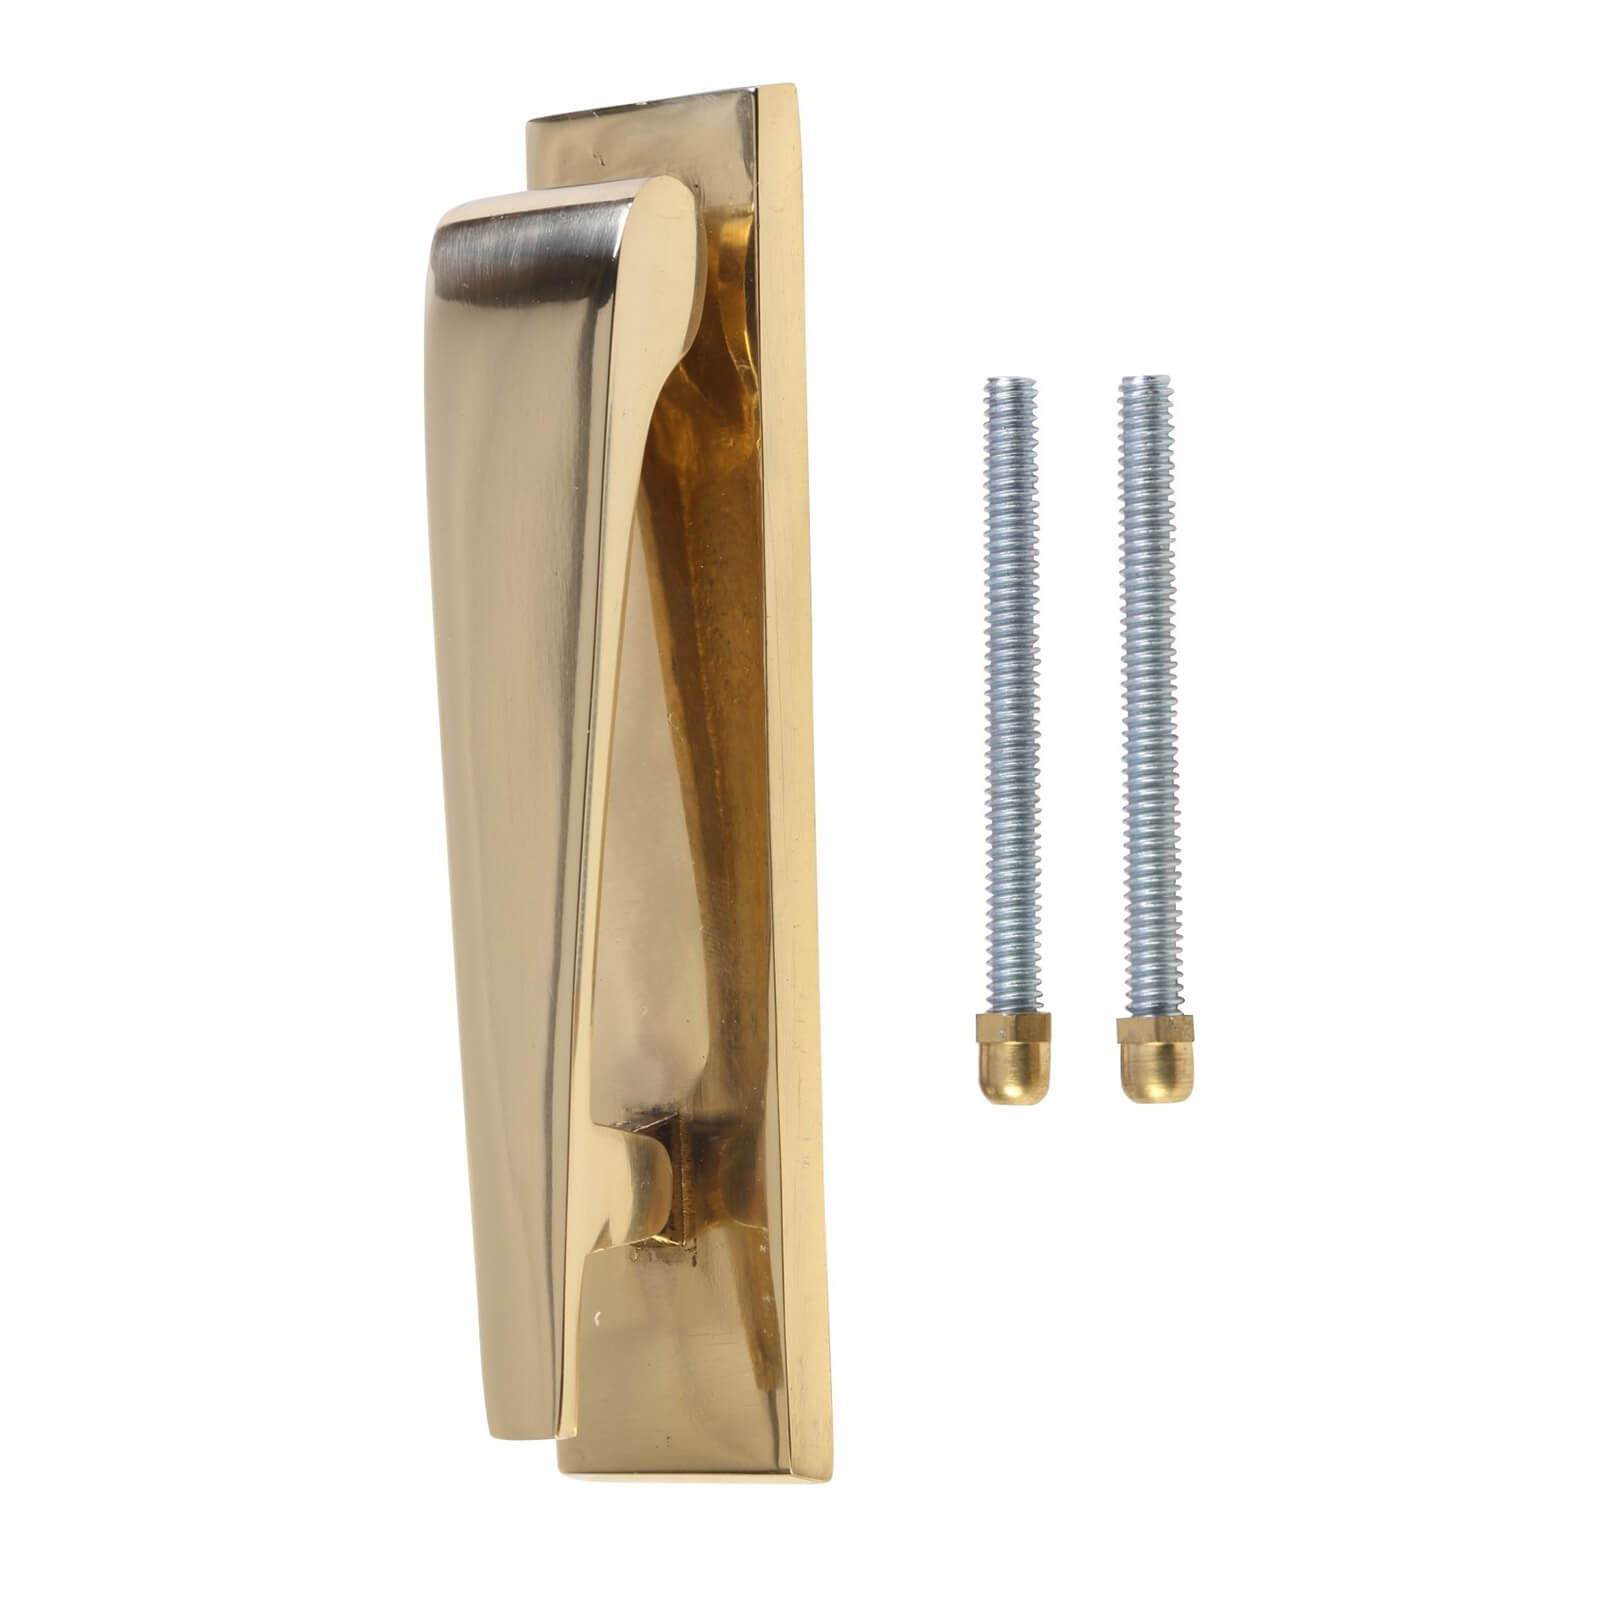 Photo of Plain Door Knocker - Polished Brass